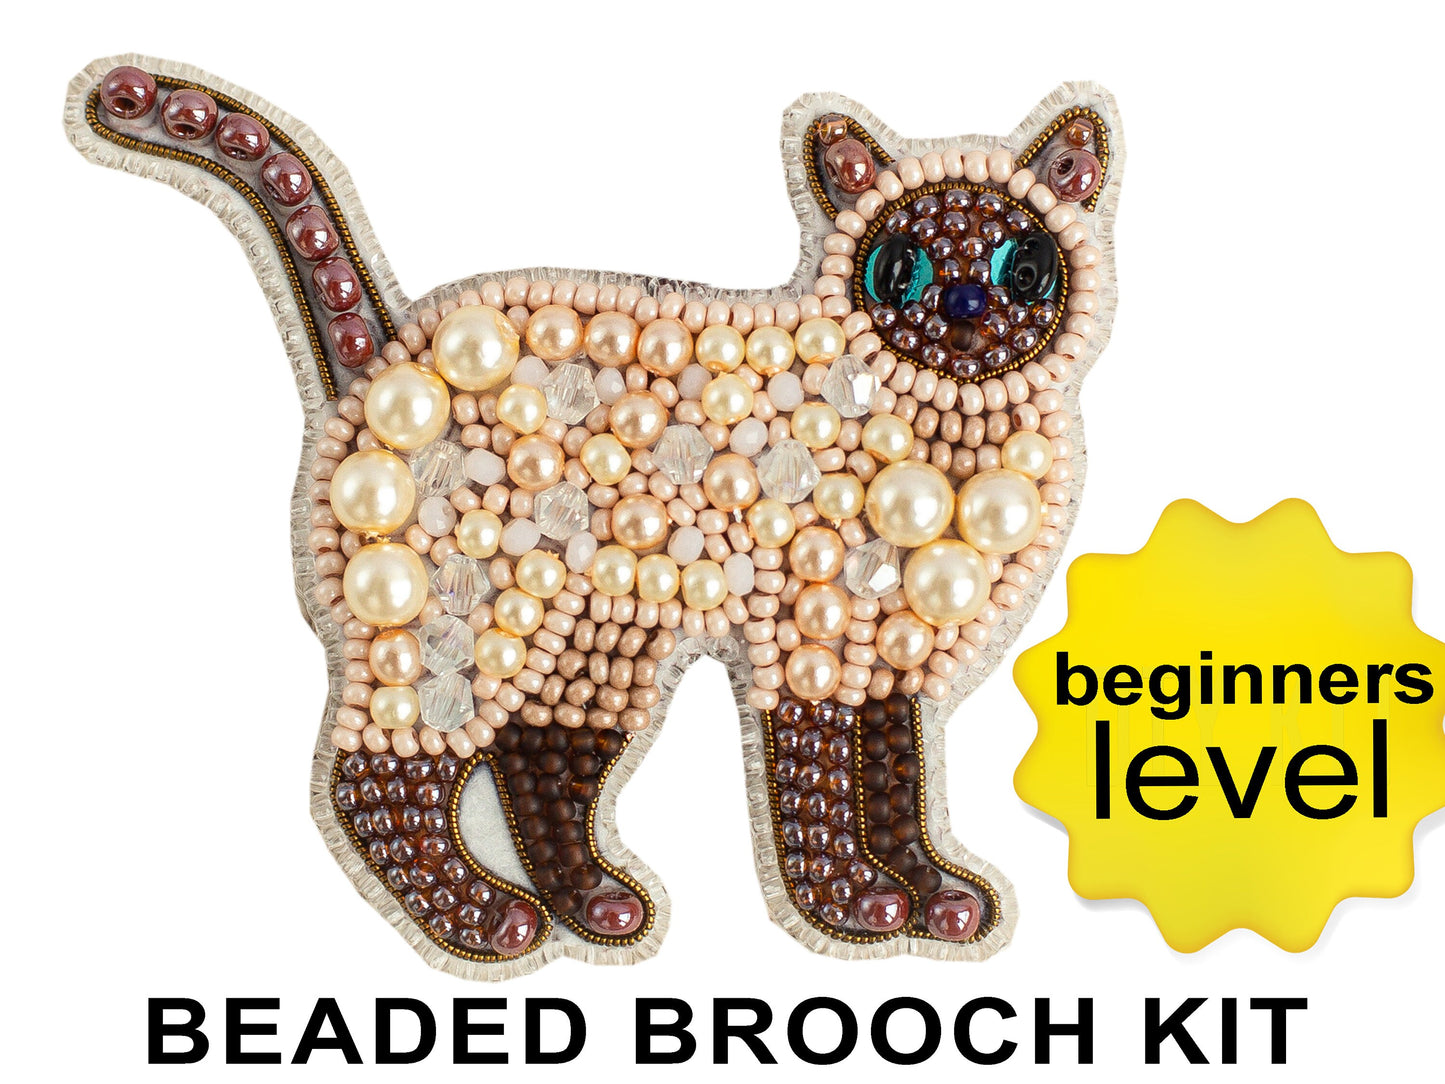 Siamese Cat Bead embroidery kit. Seed Bead Brooch kit. DIY Craft kit. Beadweaving Kit. Needlework beading. Handmade Jewelry Making Kit